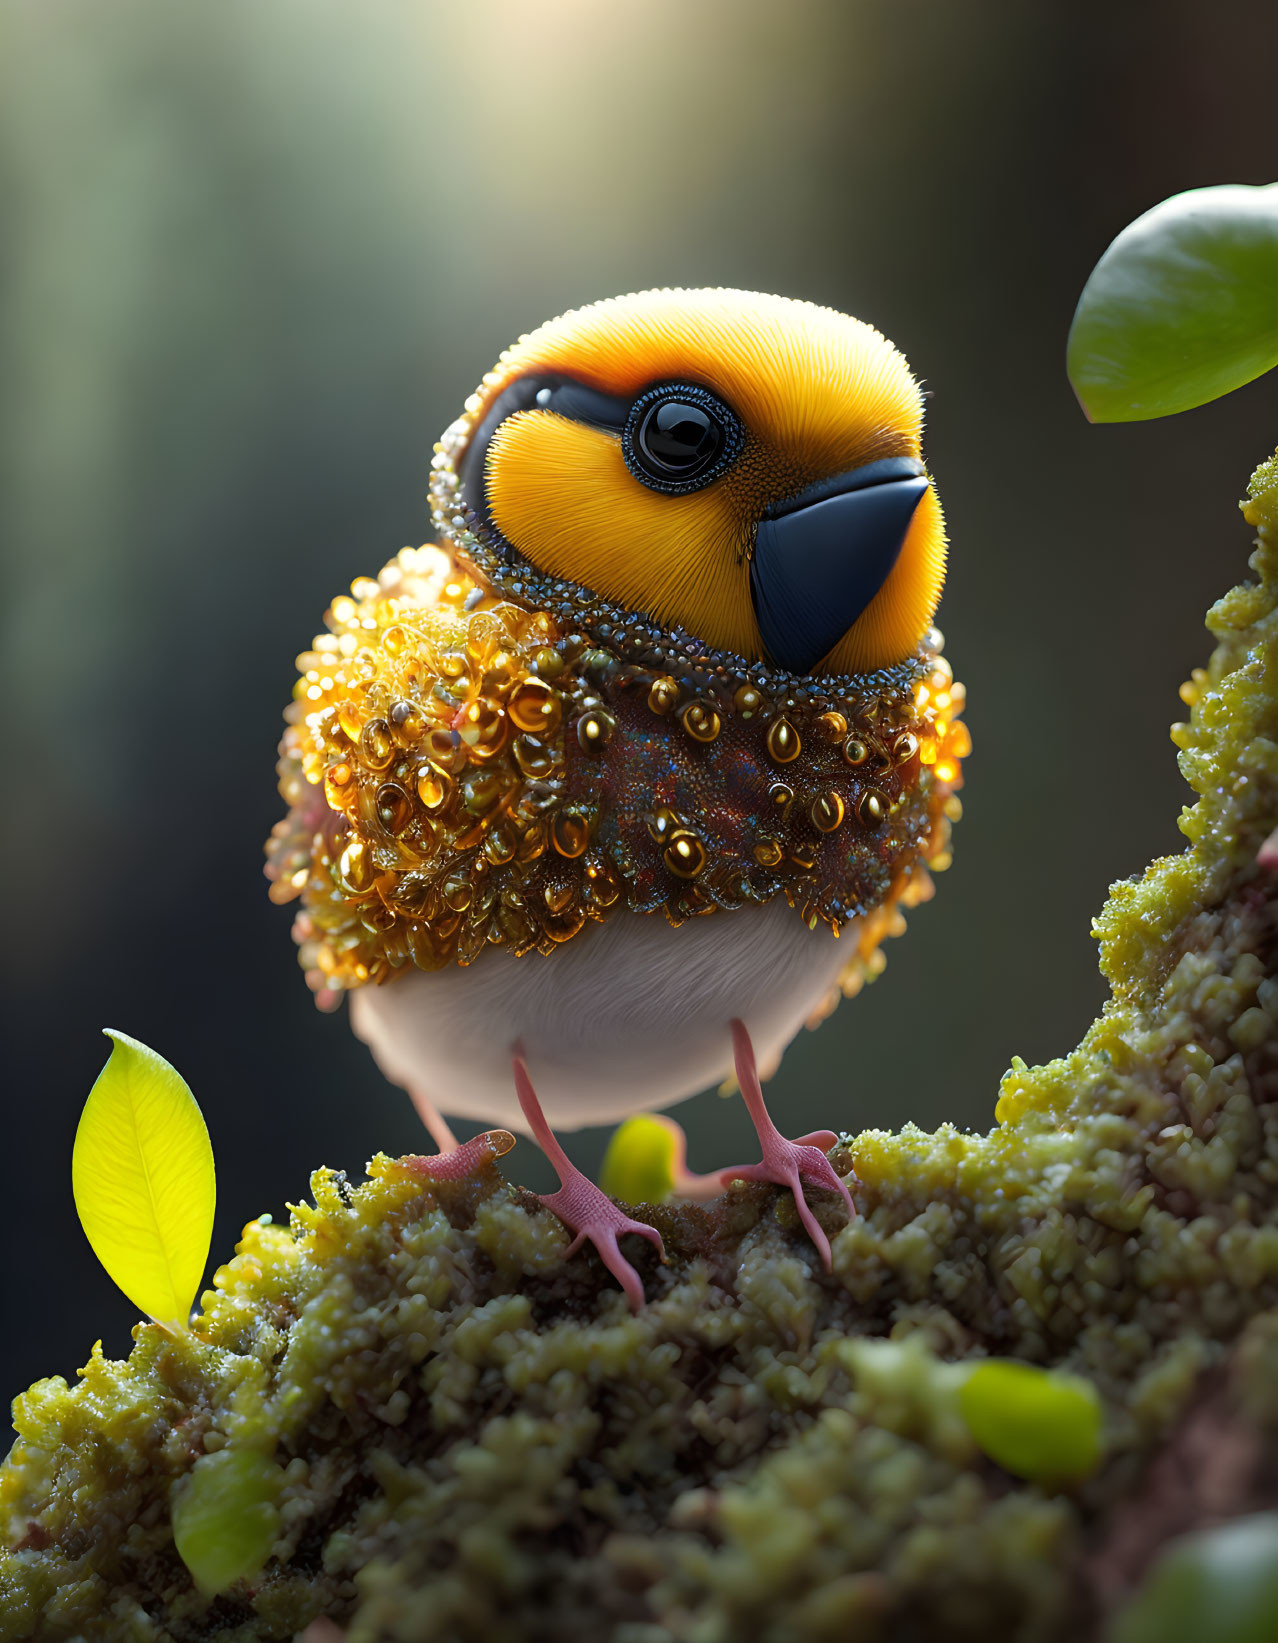 The jeweled bird